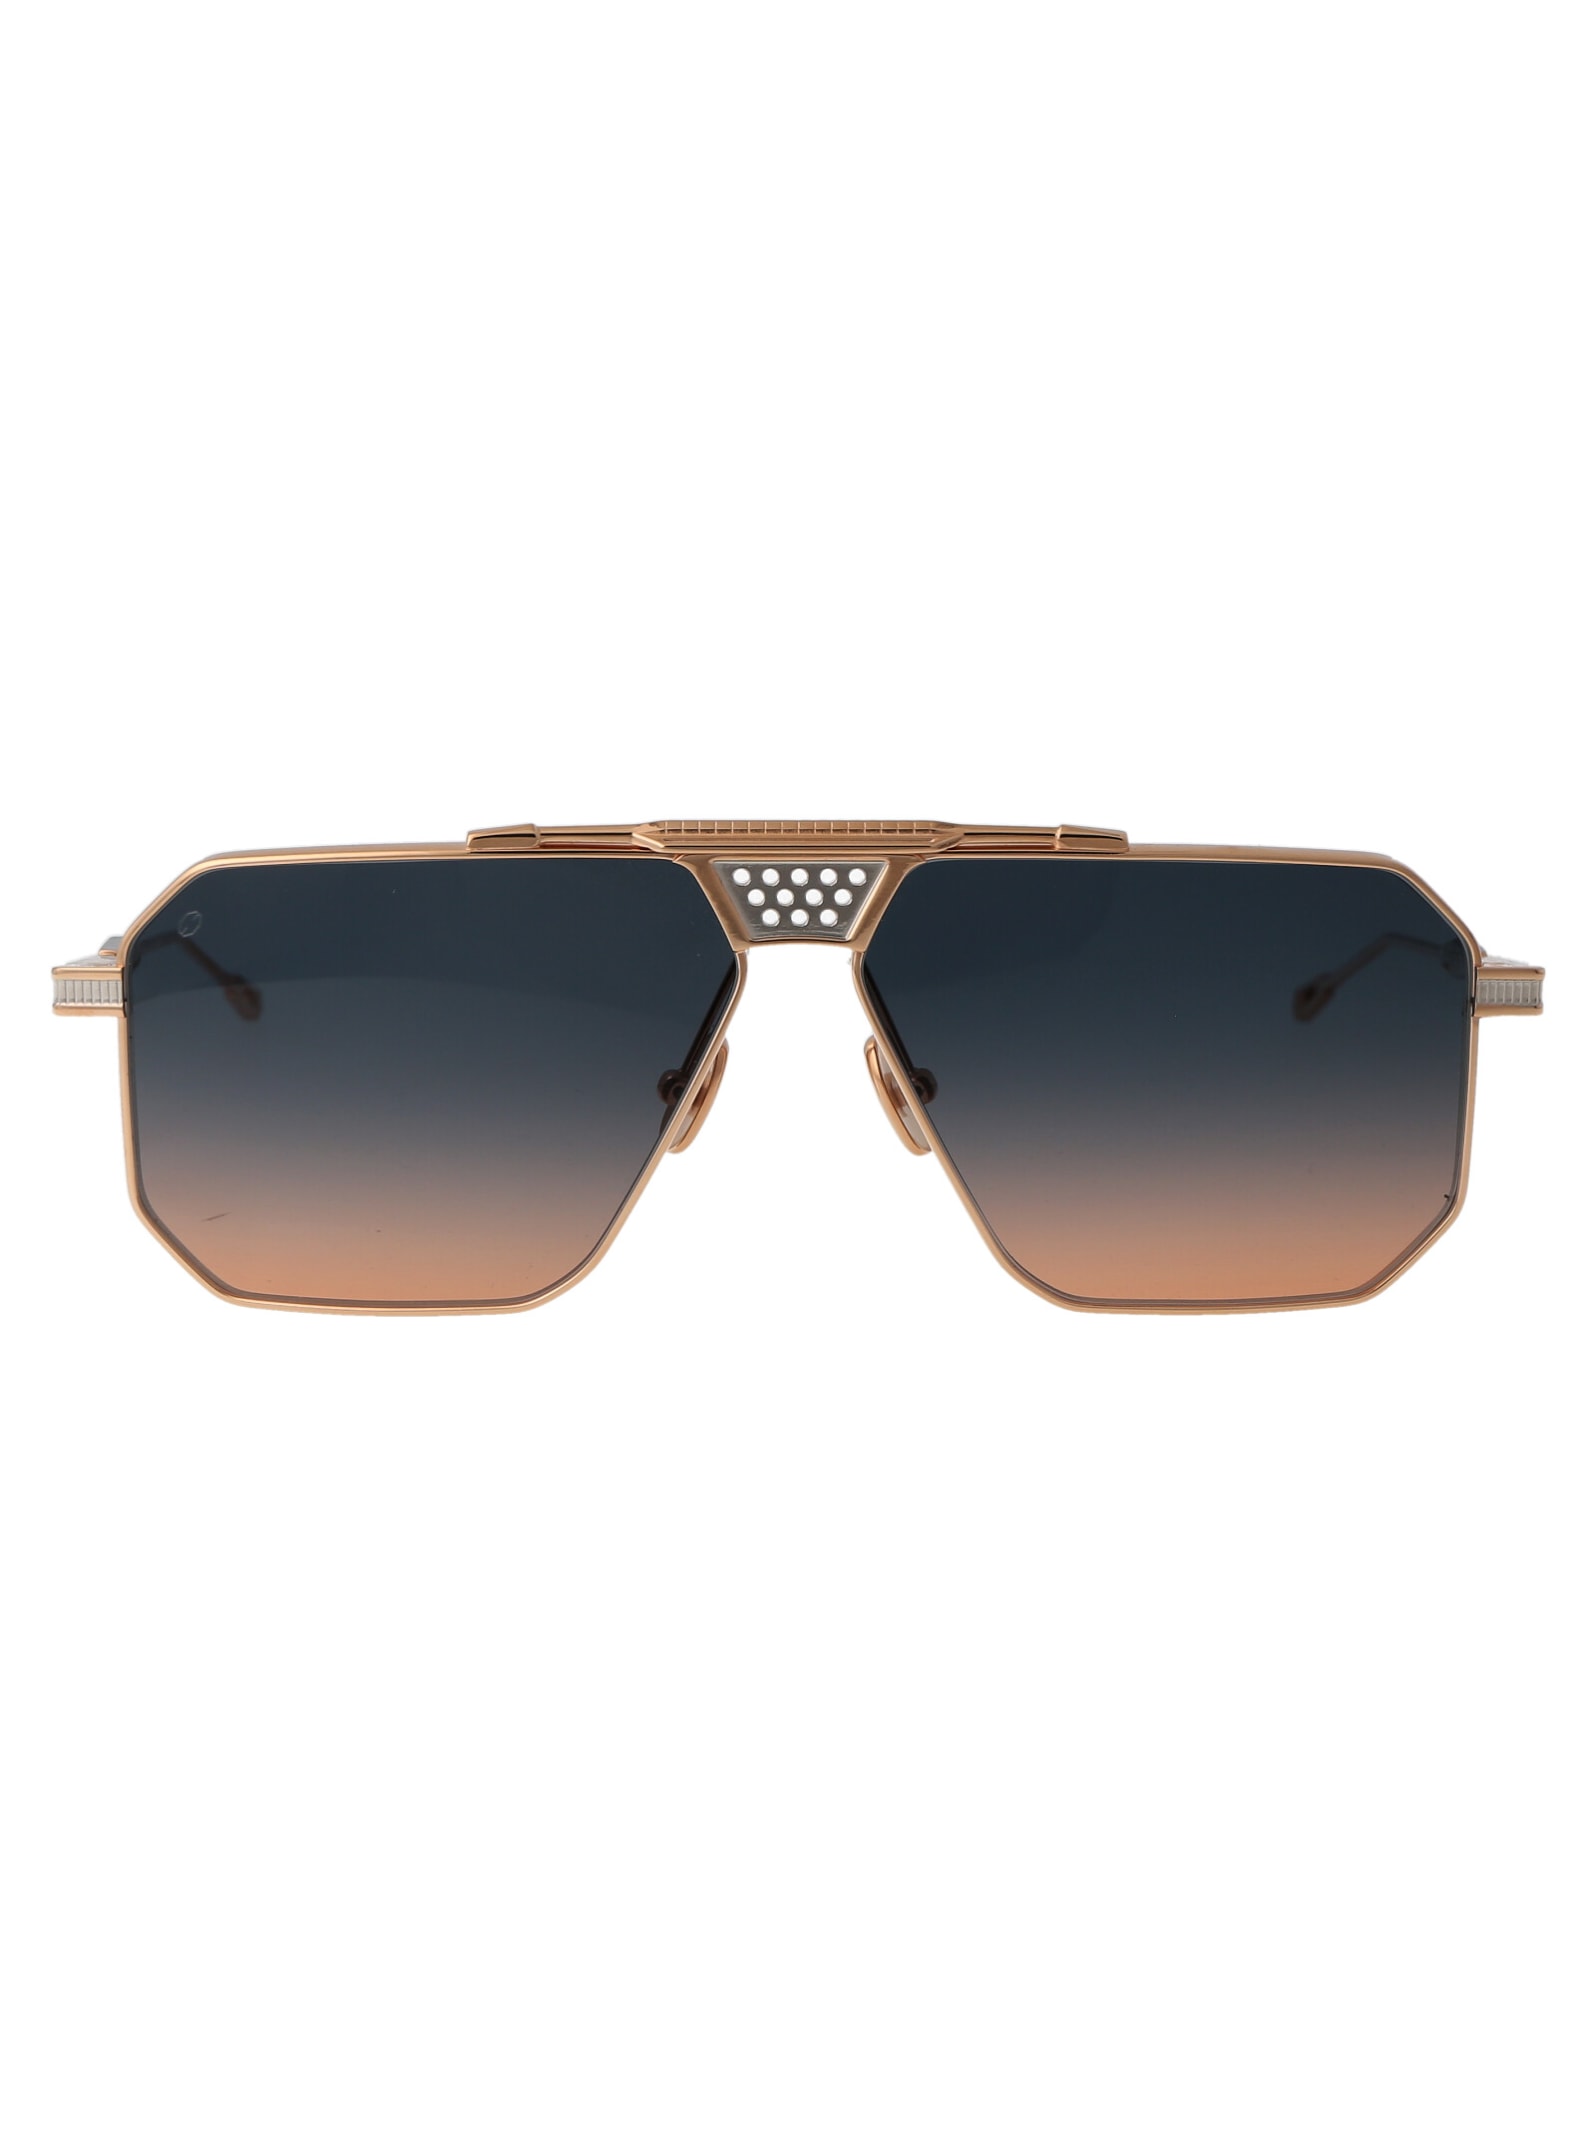 T Henri Berlinette Sunglasses In Brown